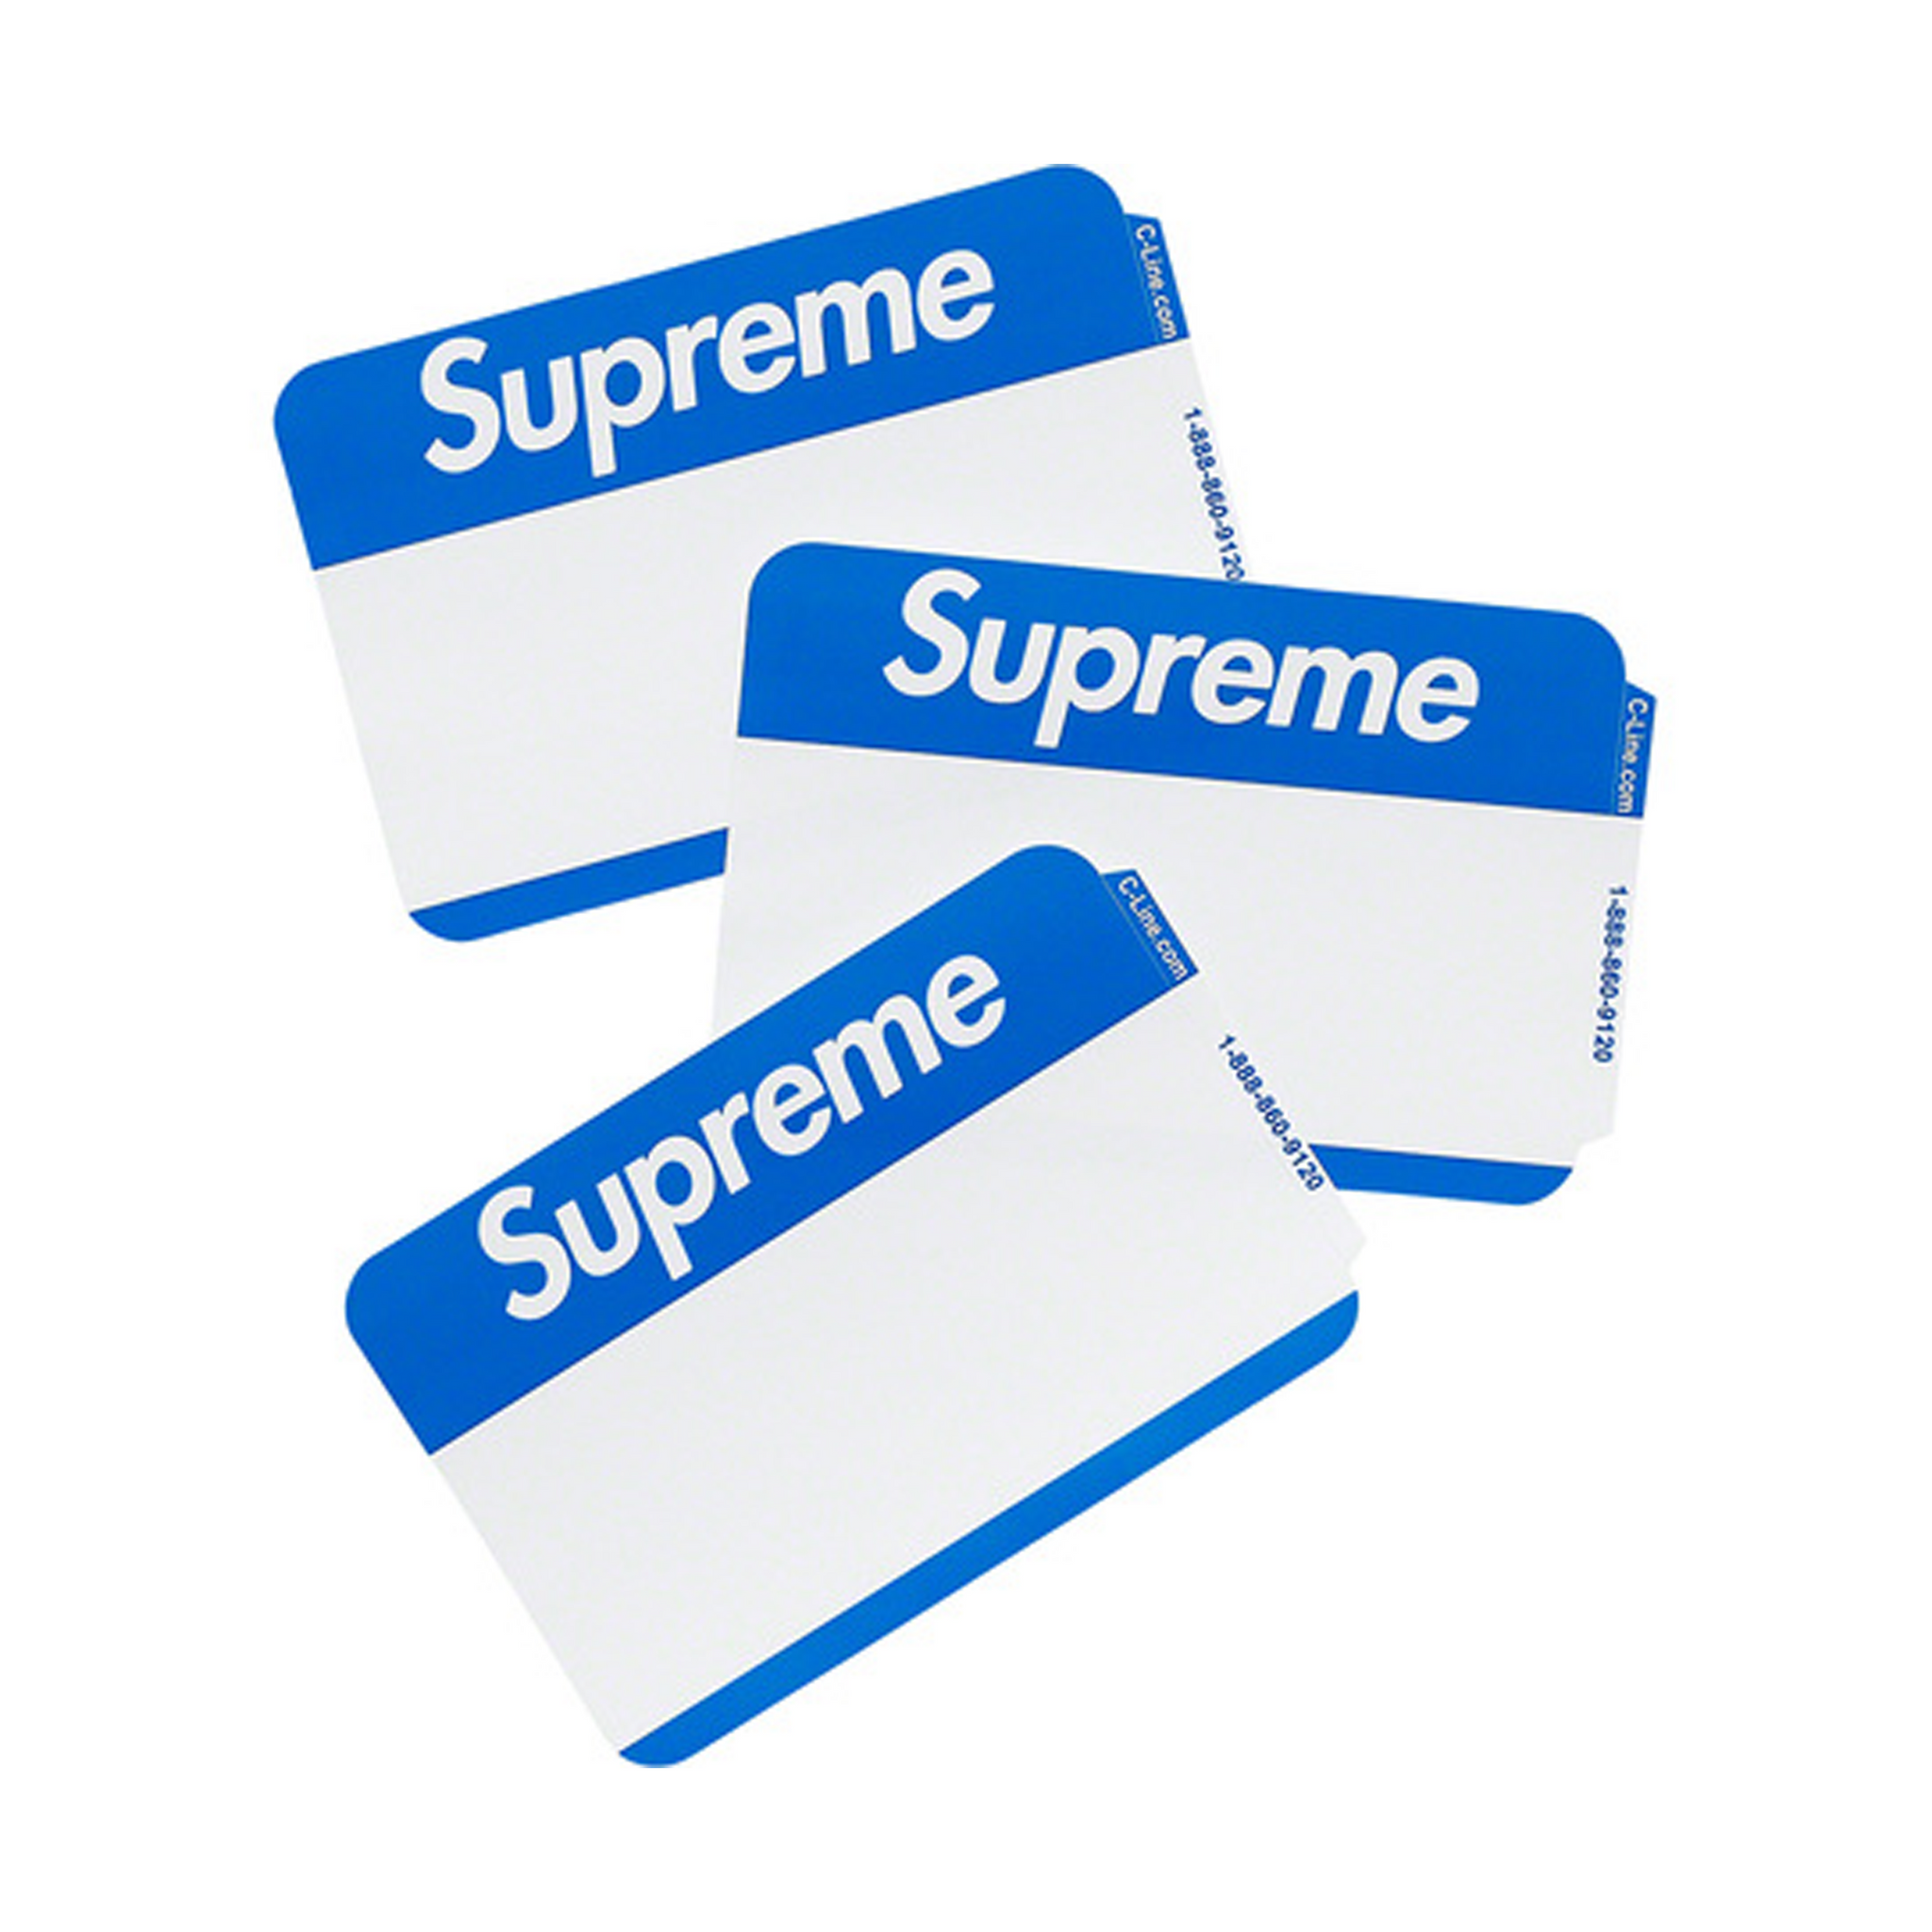 Supreme Name Tags (3 pack)